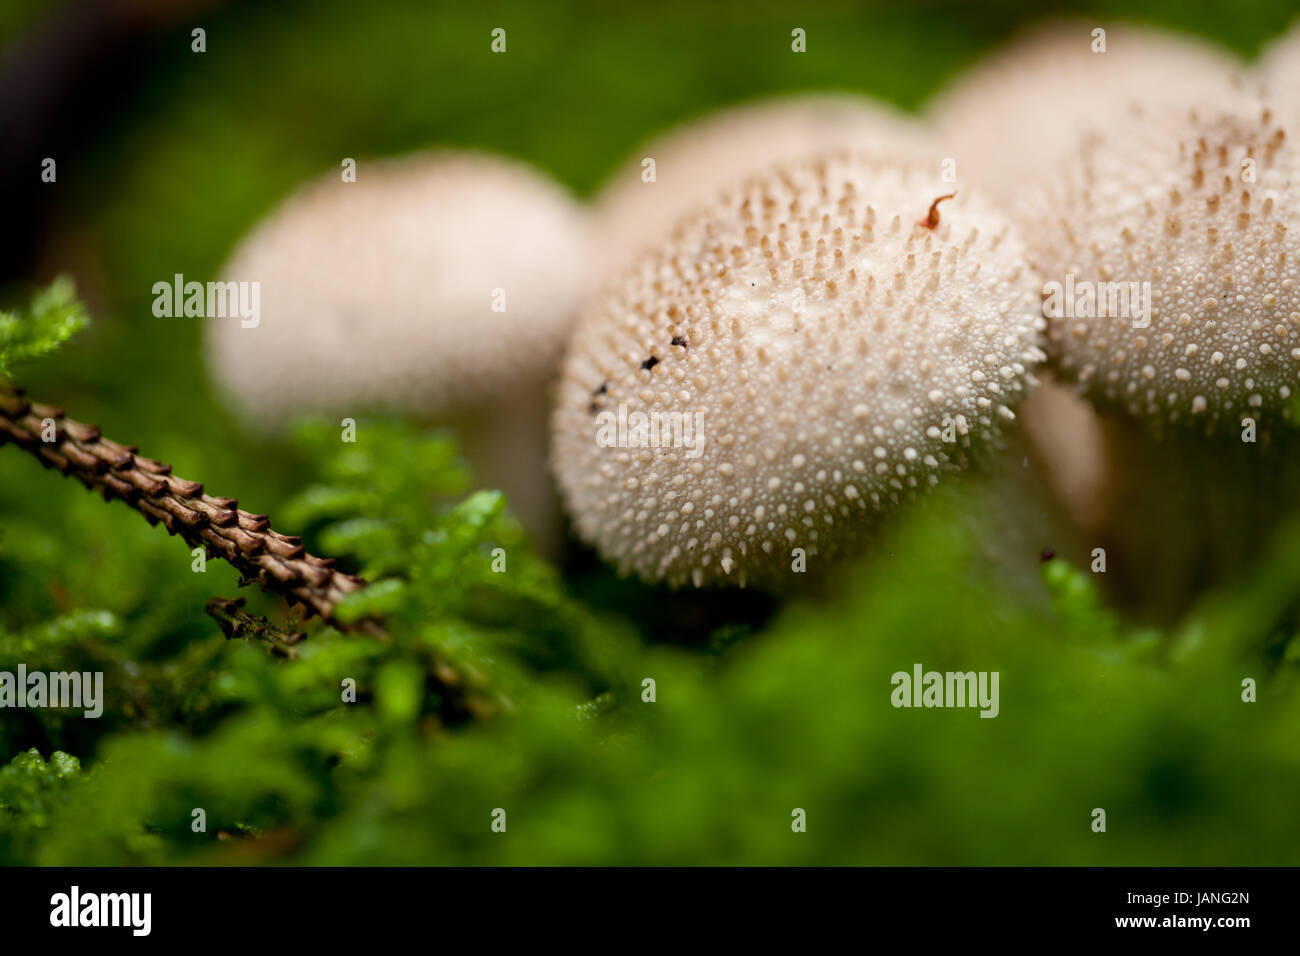 Braune weisse pilze im Wald natur walpilze moss libre nahaufnahme makro Banque D'Images